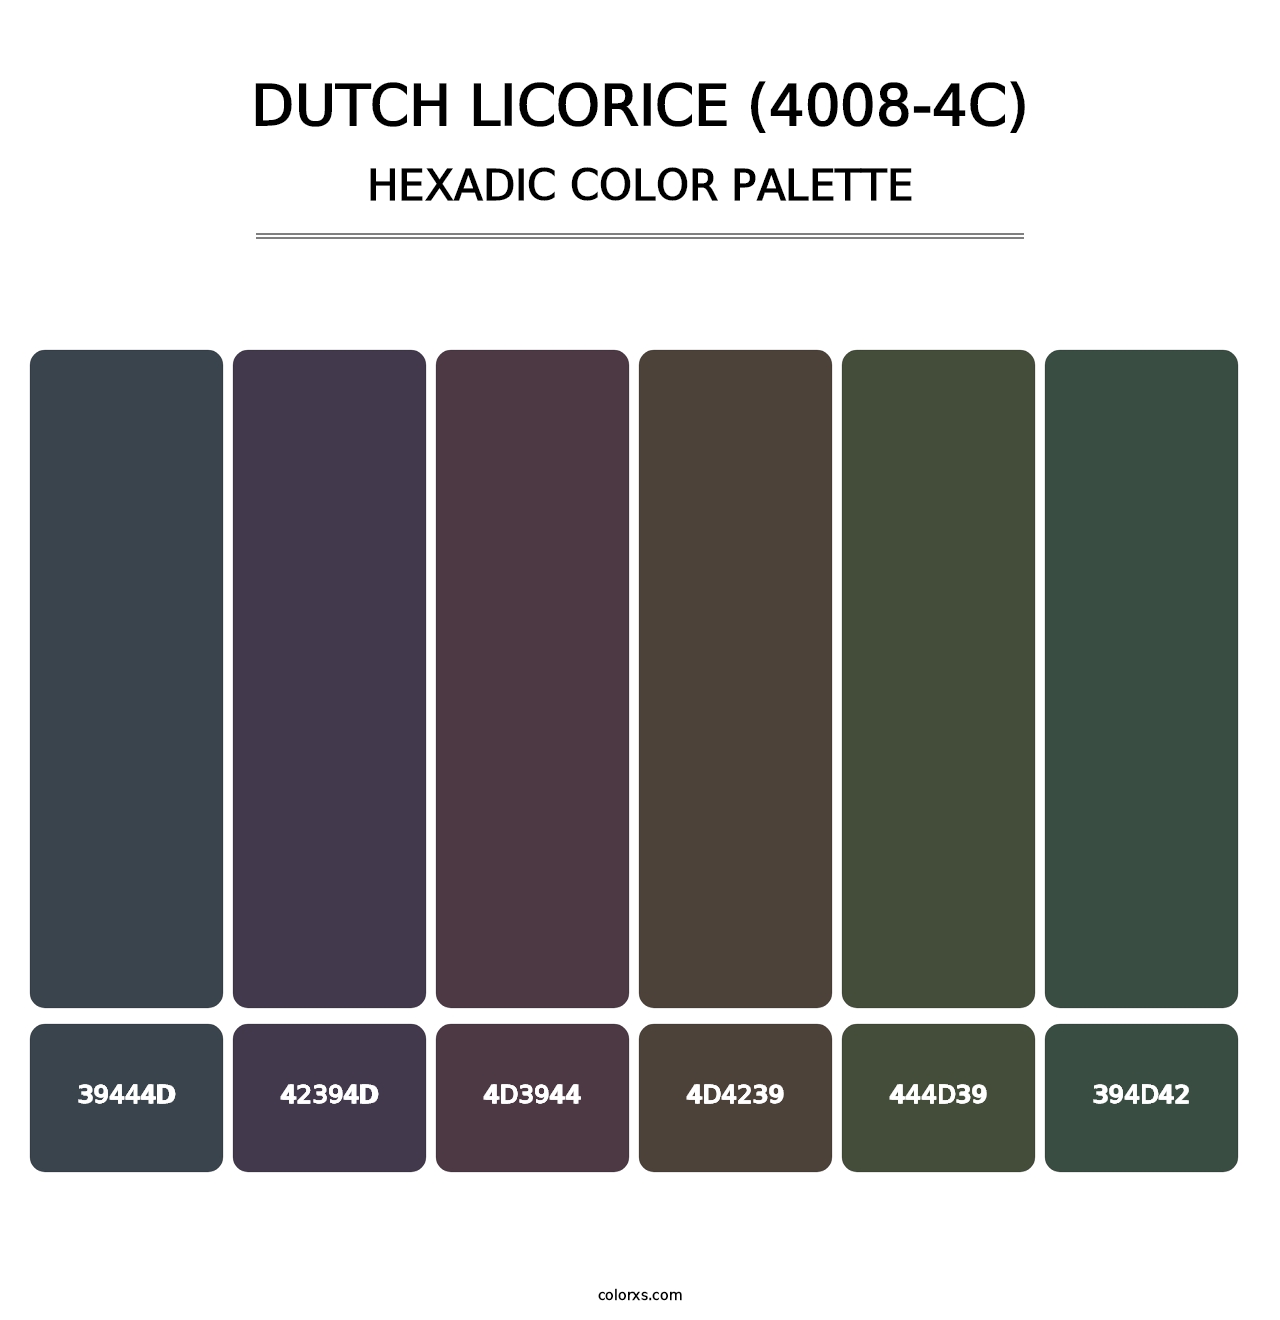 Dutch Licorice (4008-4C) - Hexadic Color Palette